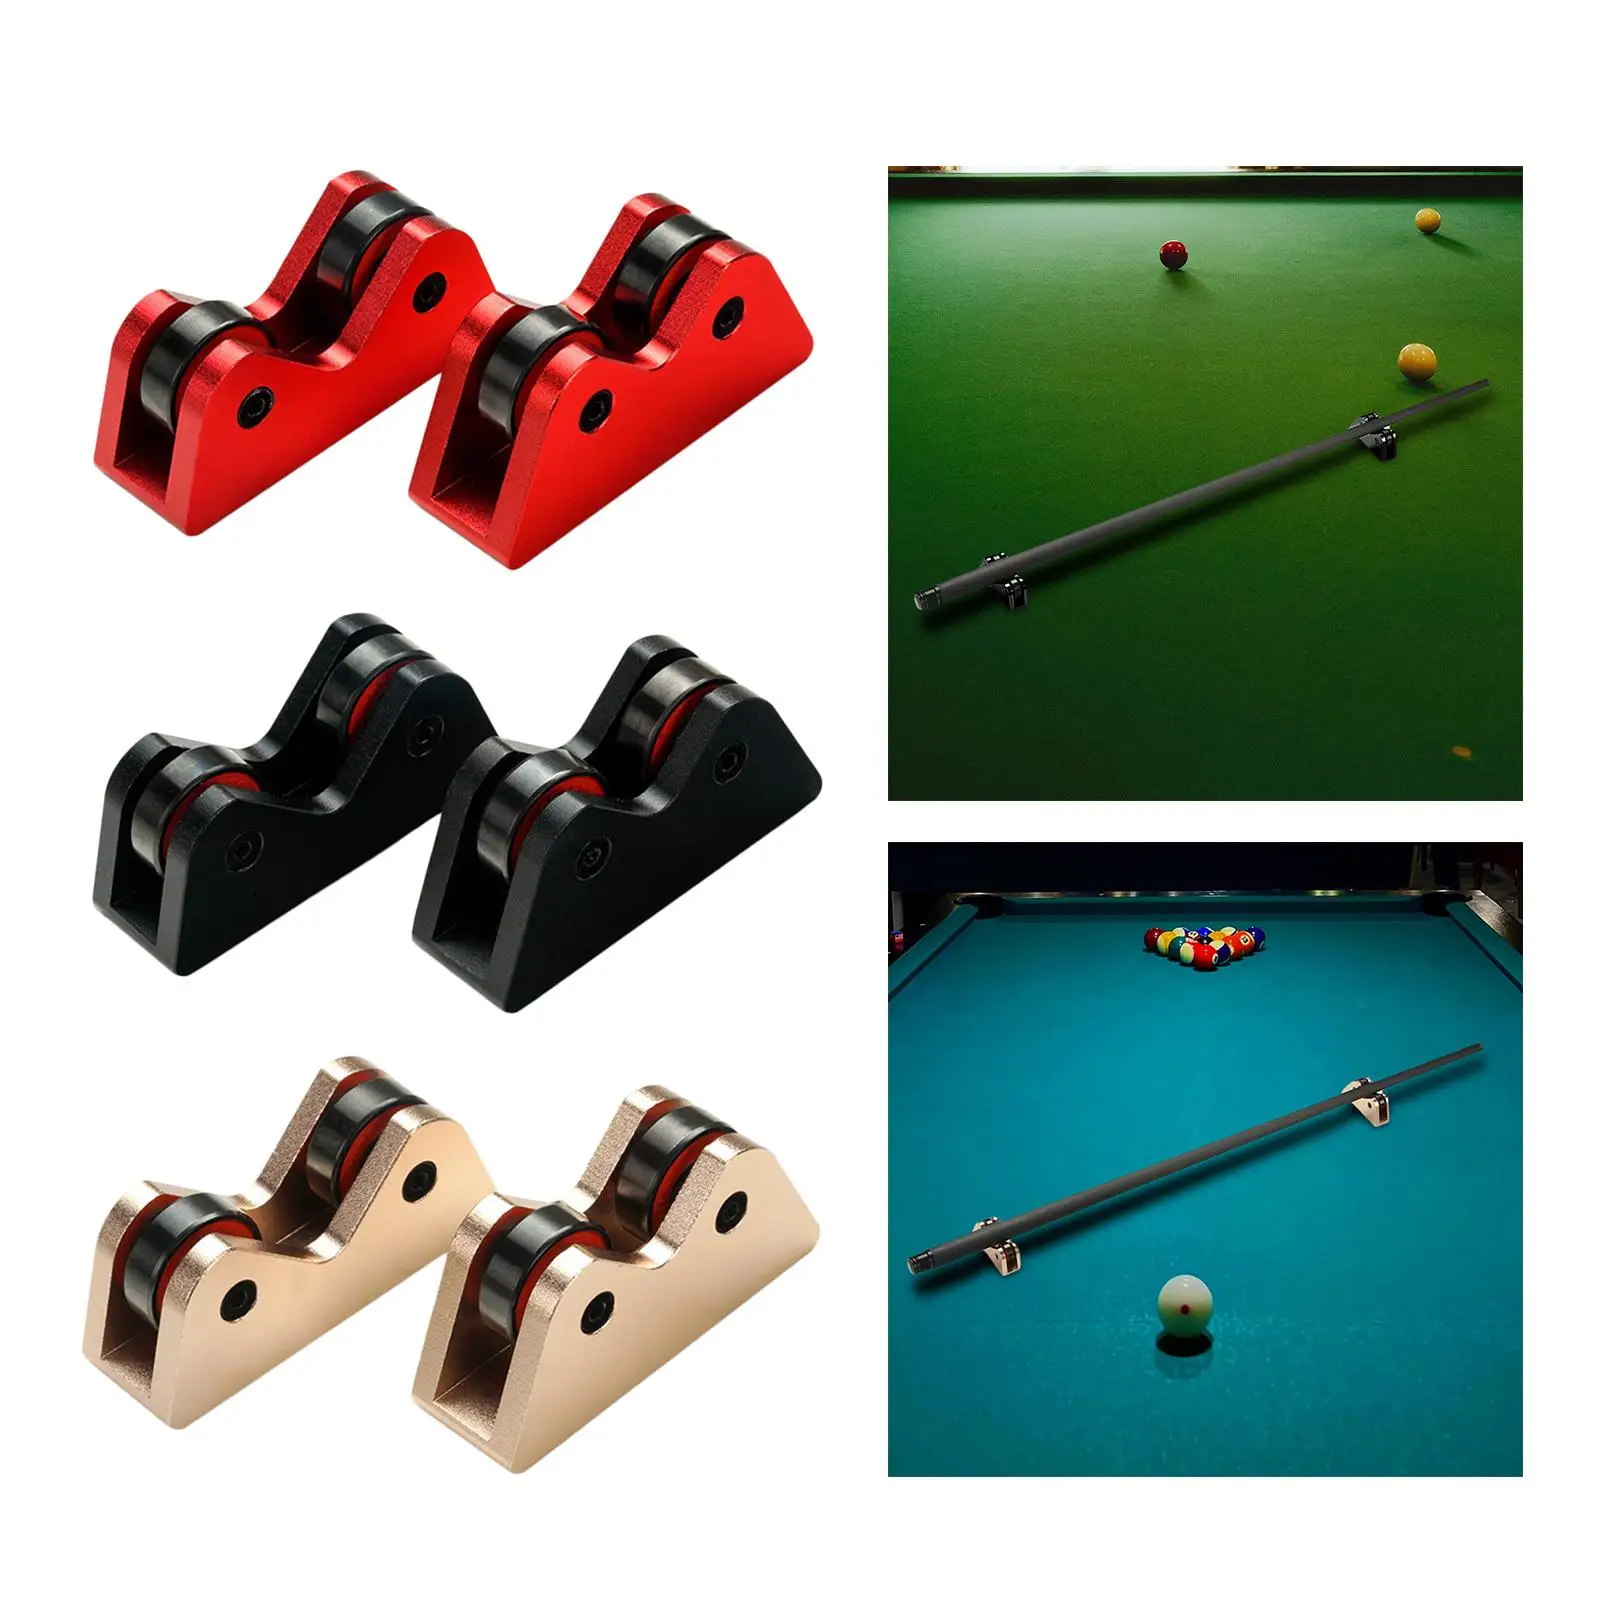 2x Snooker Club Straightness Detector Checking Inspect Tool Pool Billiard Cue Straightness Checker for Bar Home Repair Maintain